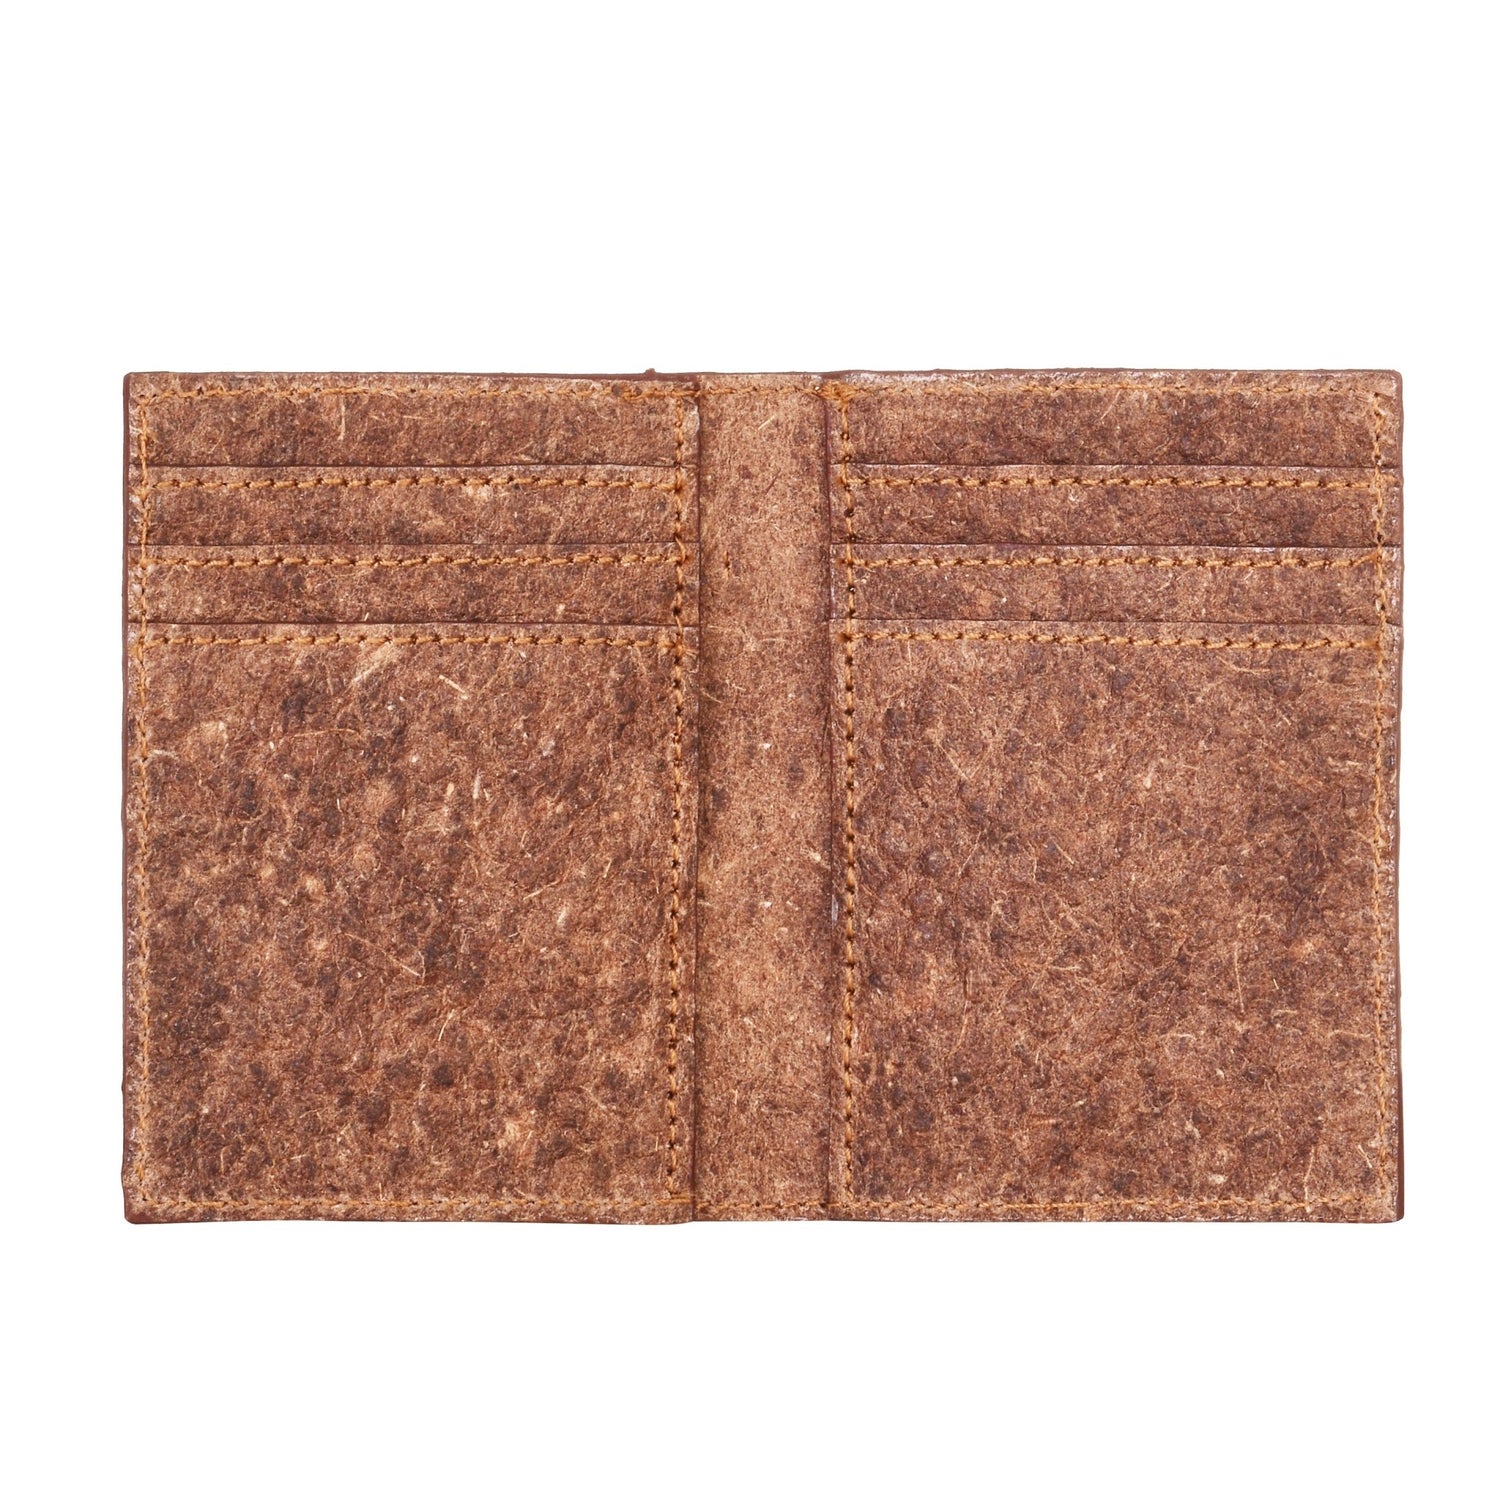 Coconut Leather Wallet - Cutch Brown - EcoArtisans